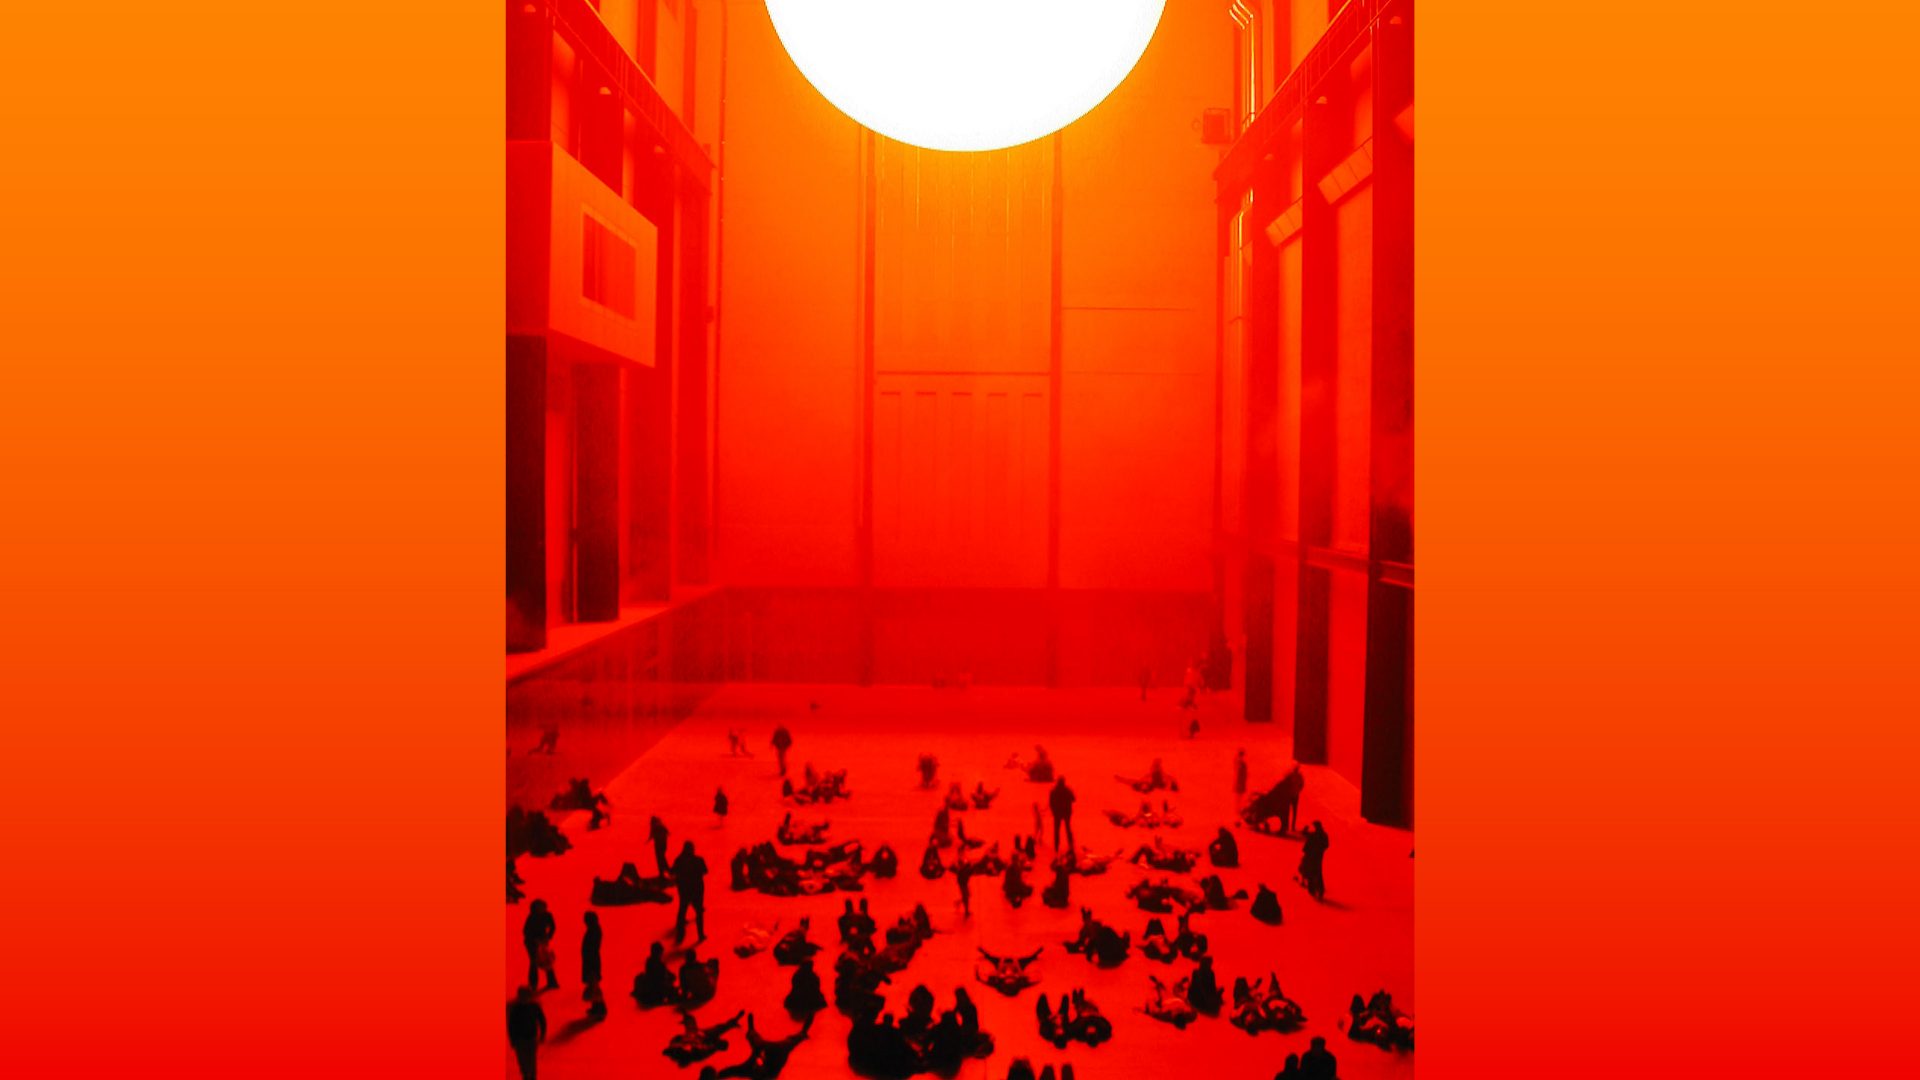 Danish artist Olafur Eliasson’s artificial sun in Tate Modern’s Turbine Hall, 2003. Photo: InPictures Ltd/Corbis